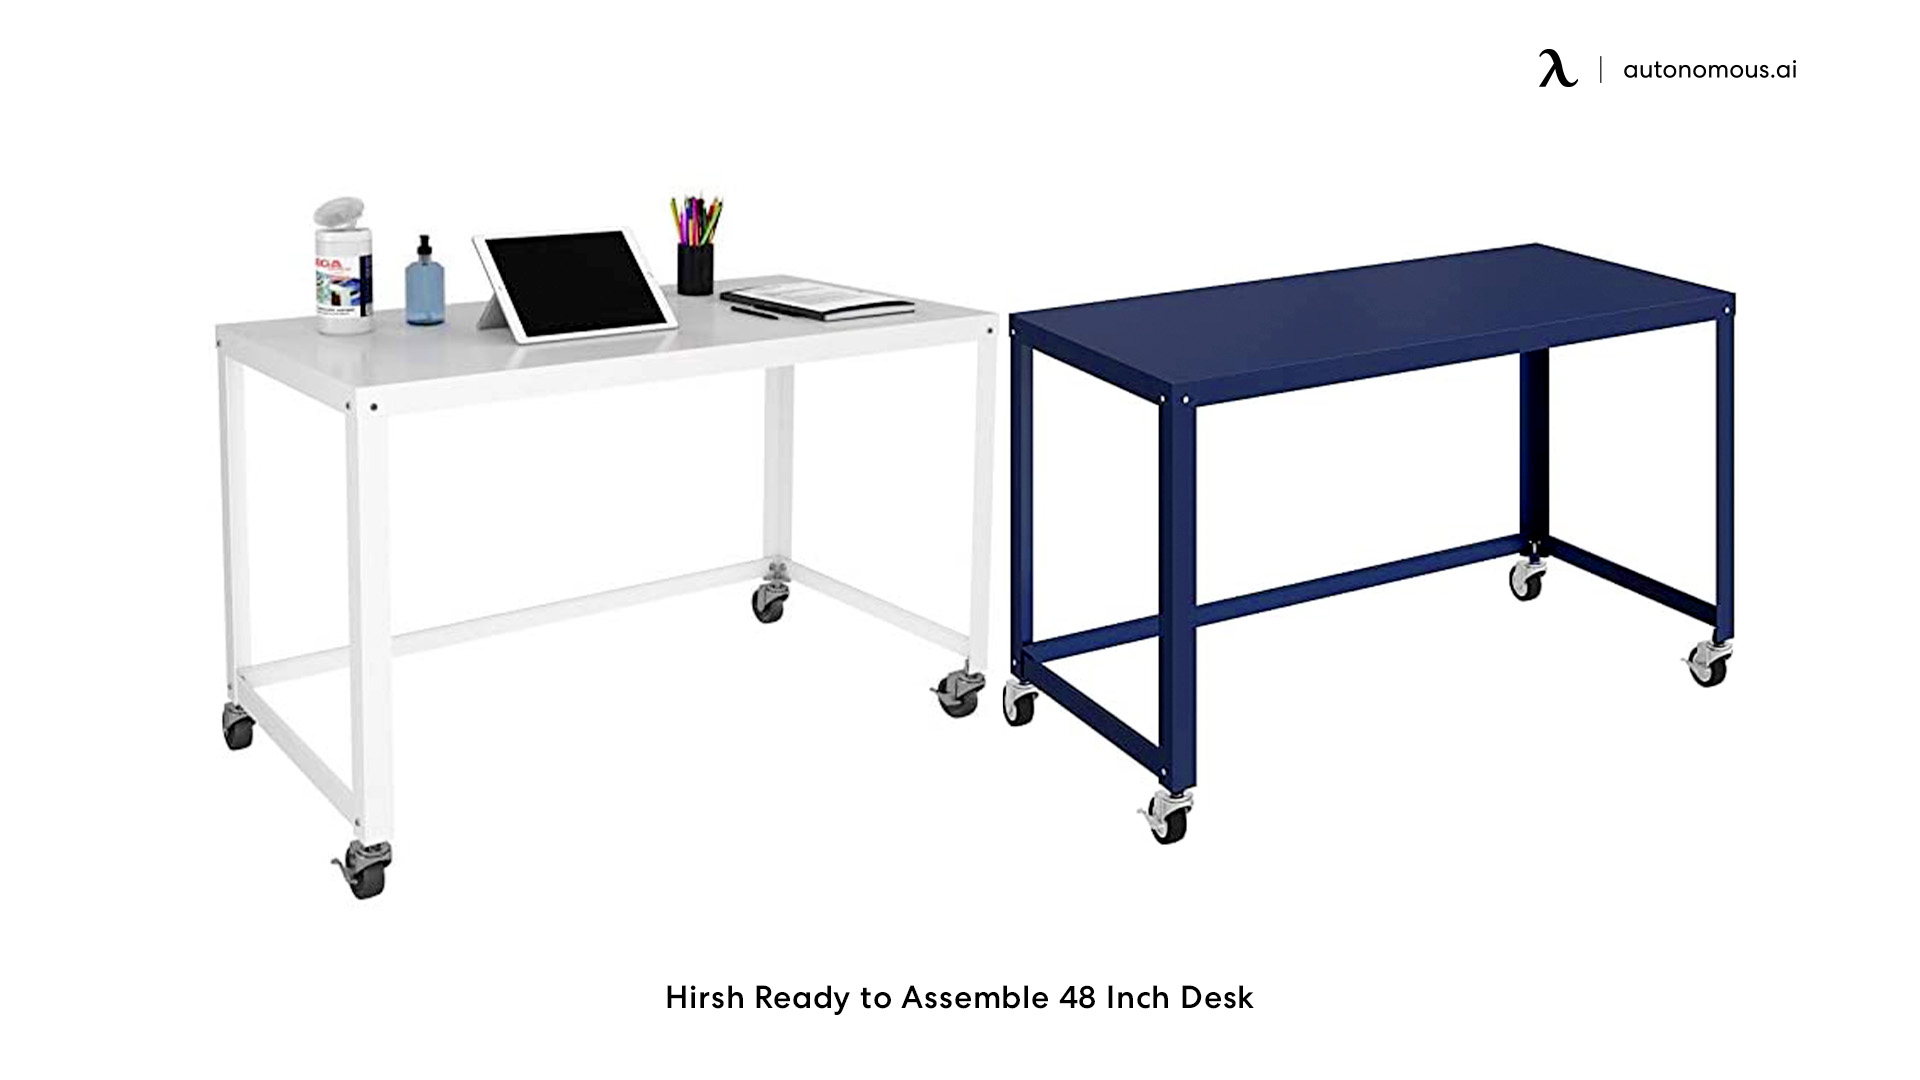 Hirsh Ready-to-Assemble Desk